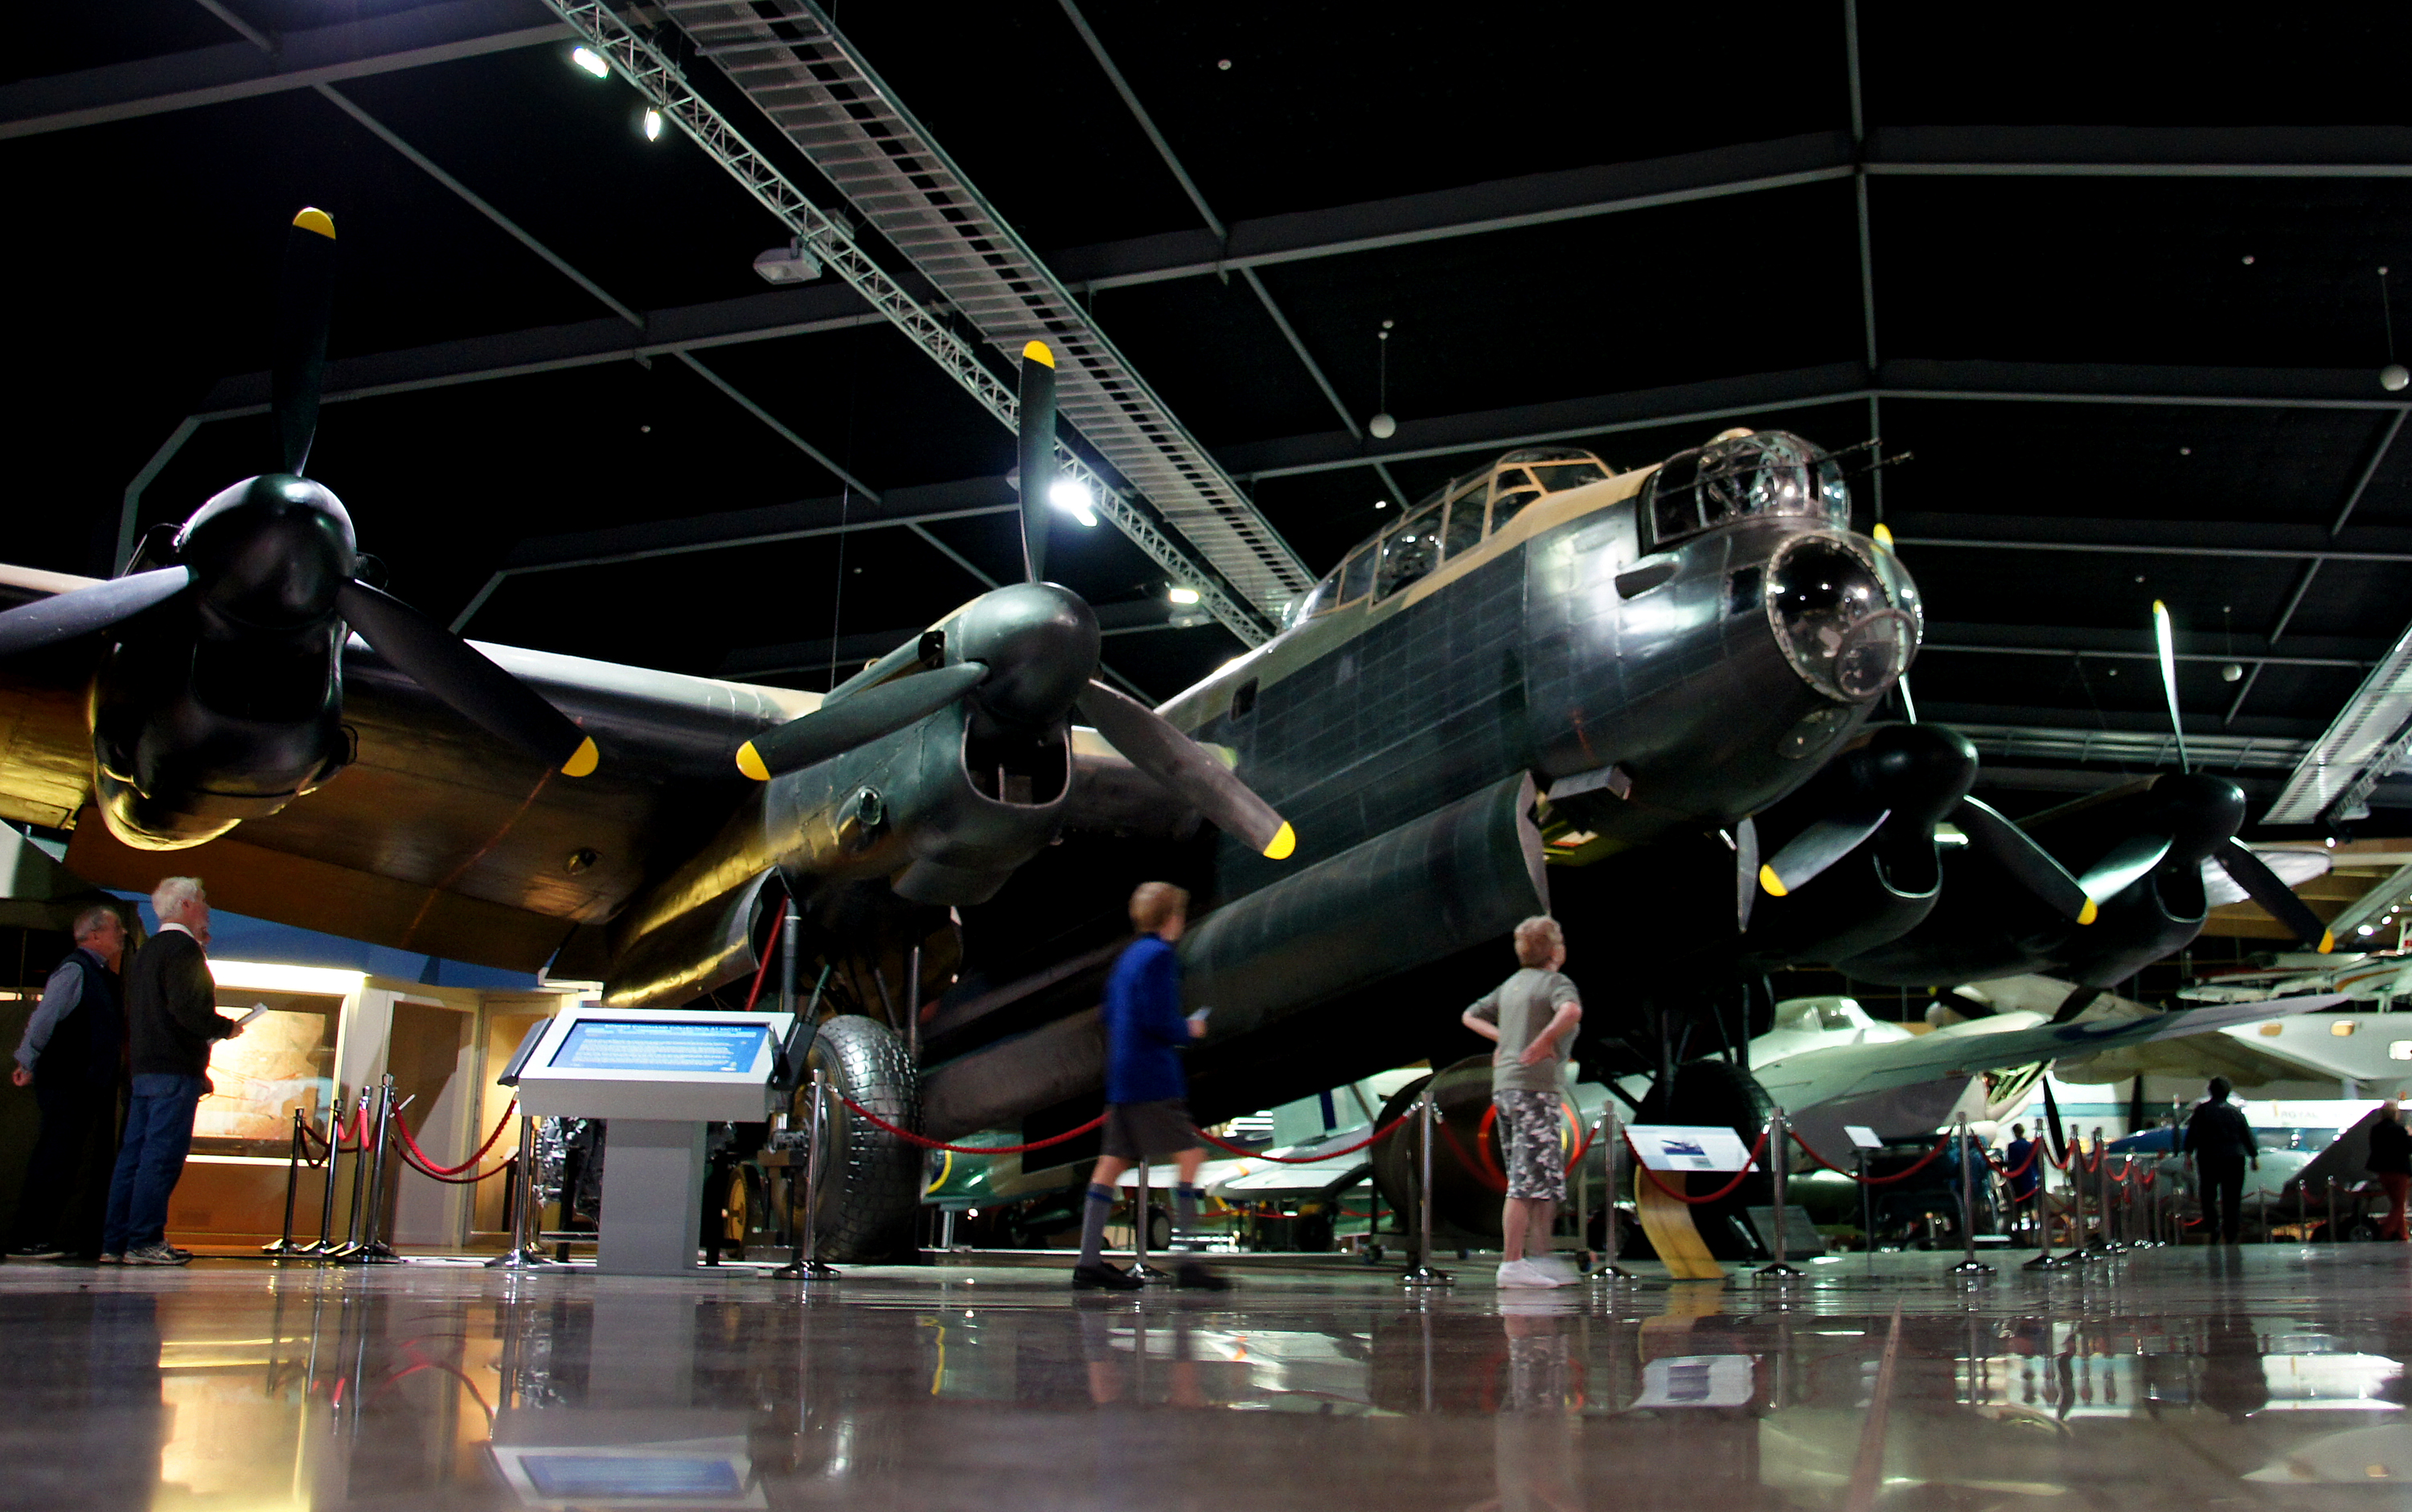 Avro Lancaster Bomber (23), Aircraft, Lancaster, Warbirds, Vehicle, HQ Photo